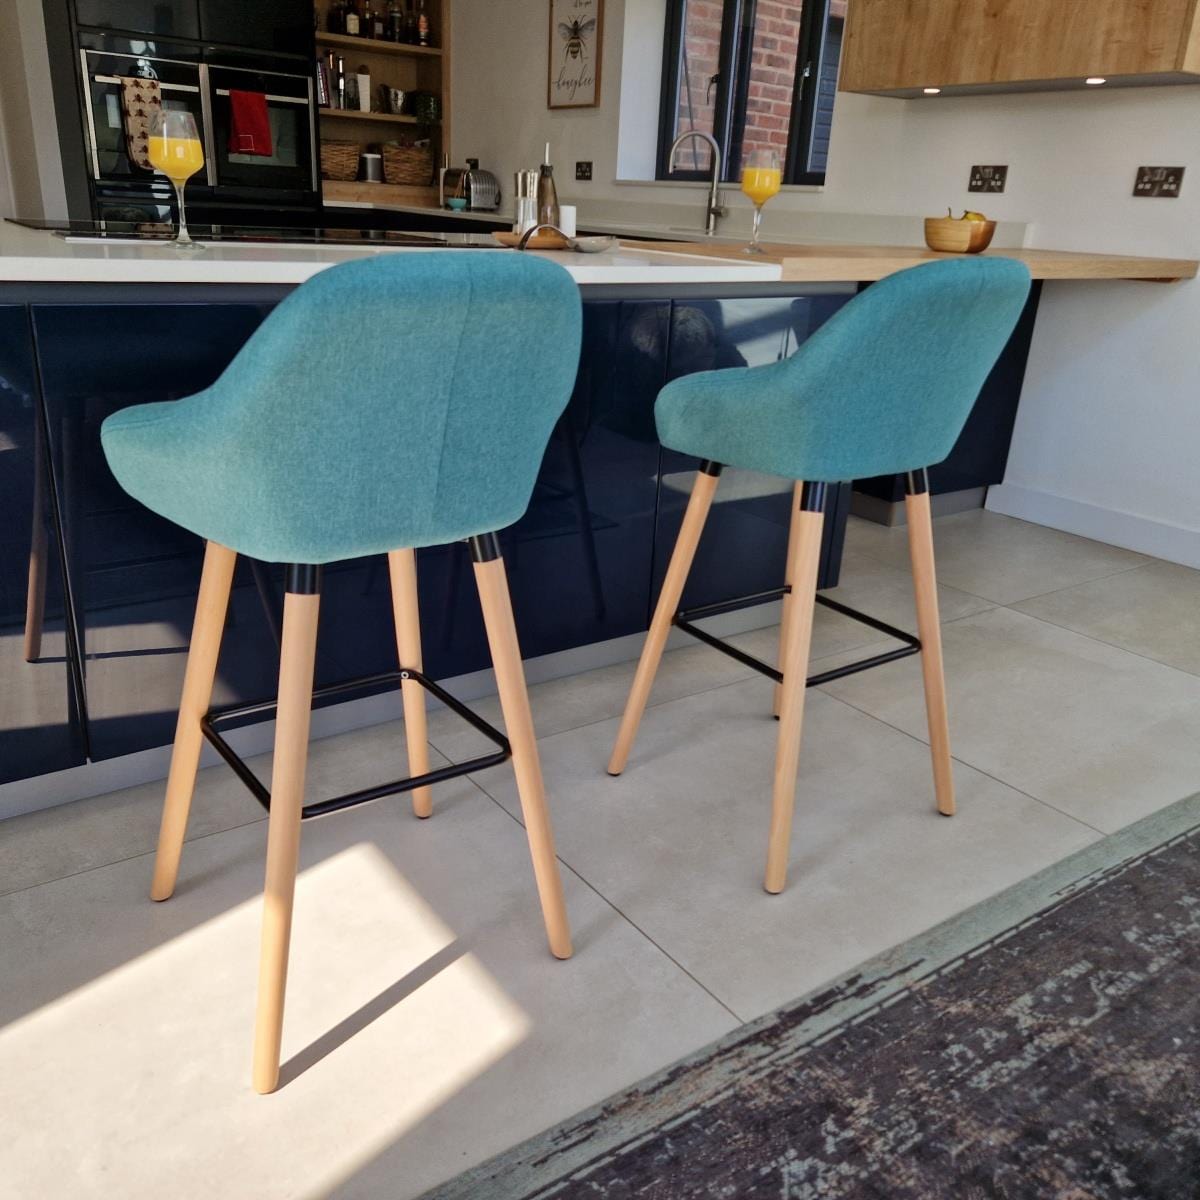 Quatropi Set of 4 Fabric Bar Stools With Wooden Legs - Luxury Green Kitchen Bar Stool